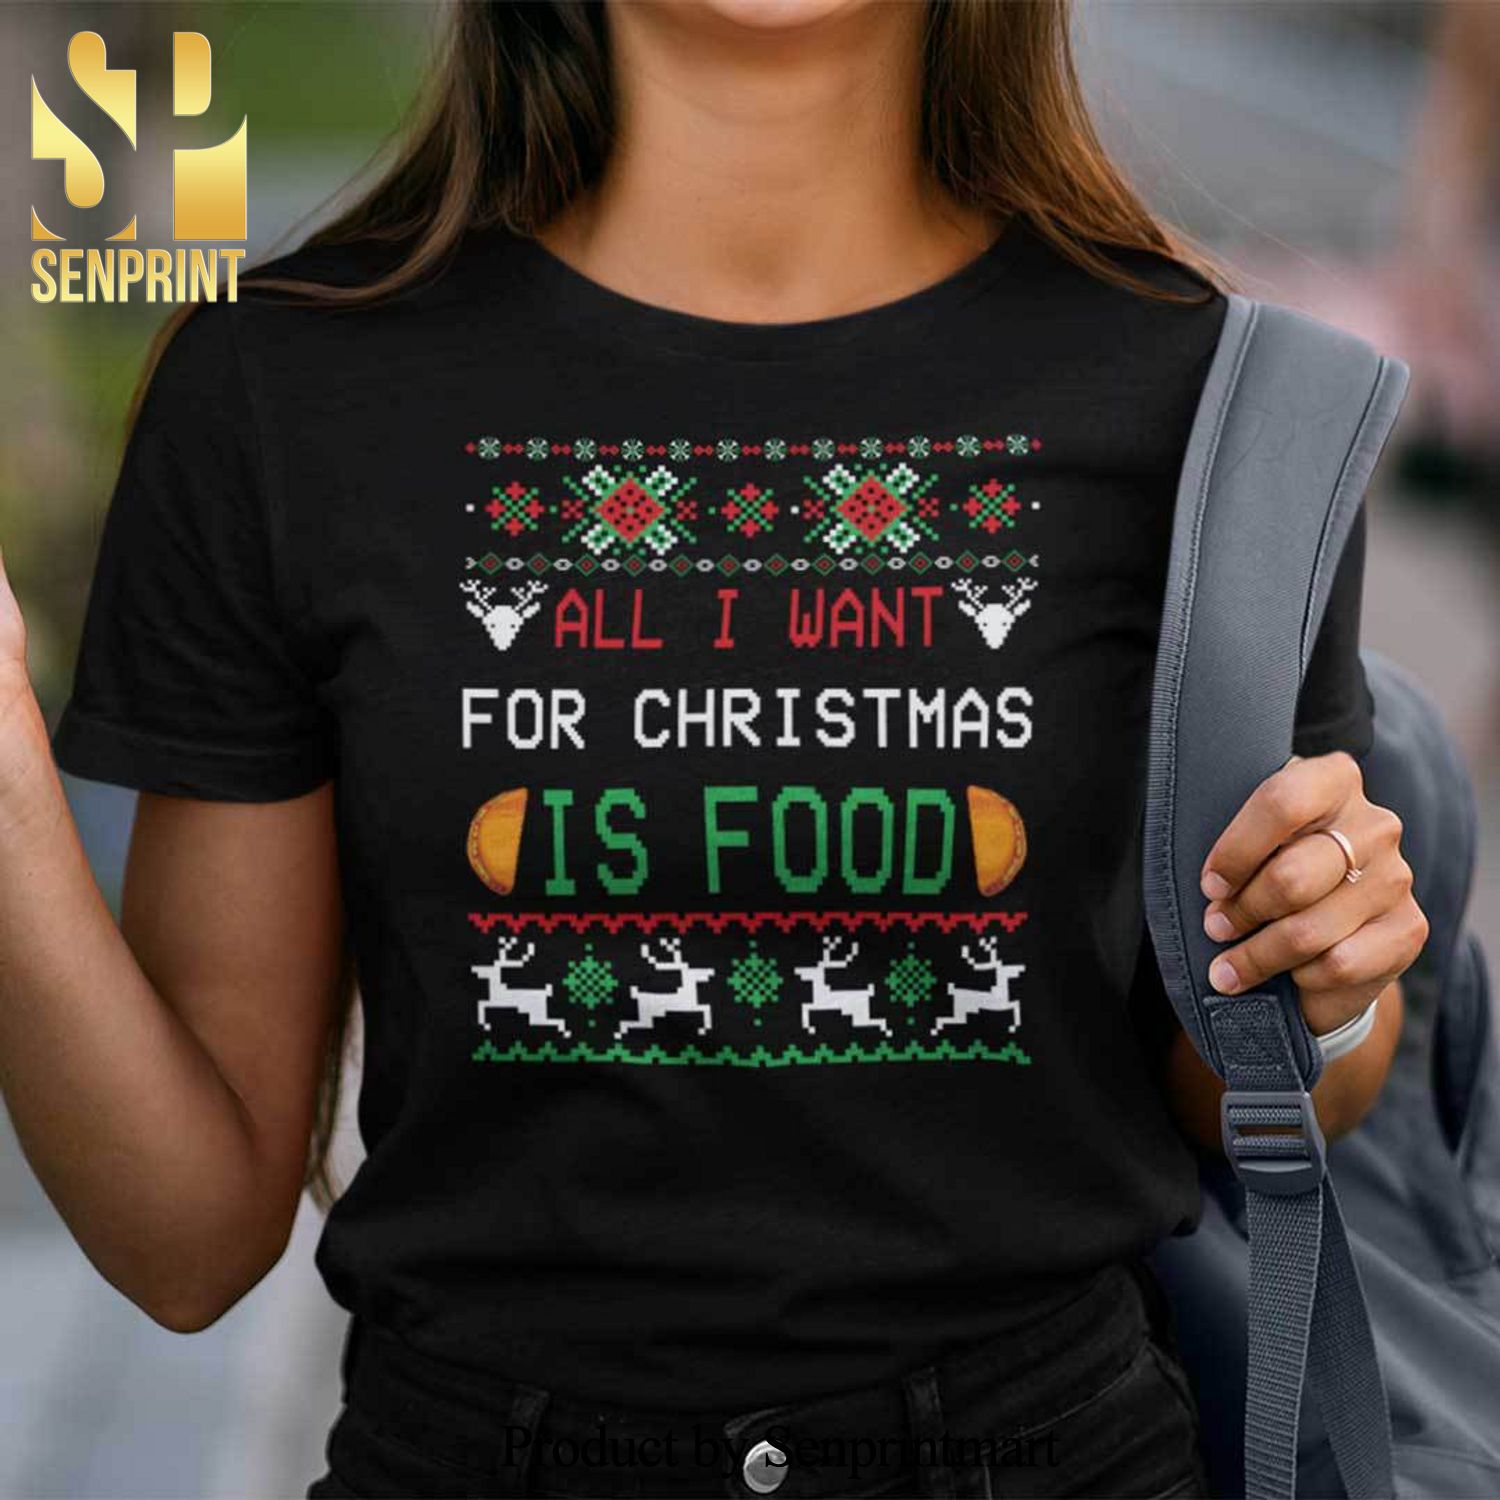 All I Want for Christmas is Food Christmas Gifts Shirt Ugly Christmas Gifts Shirt